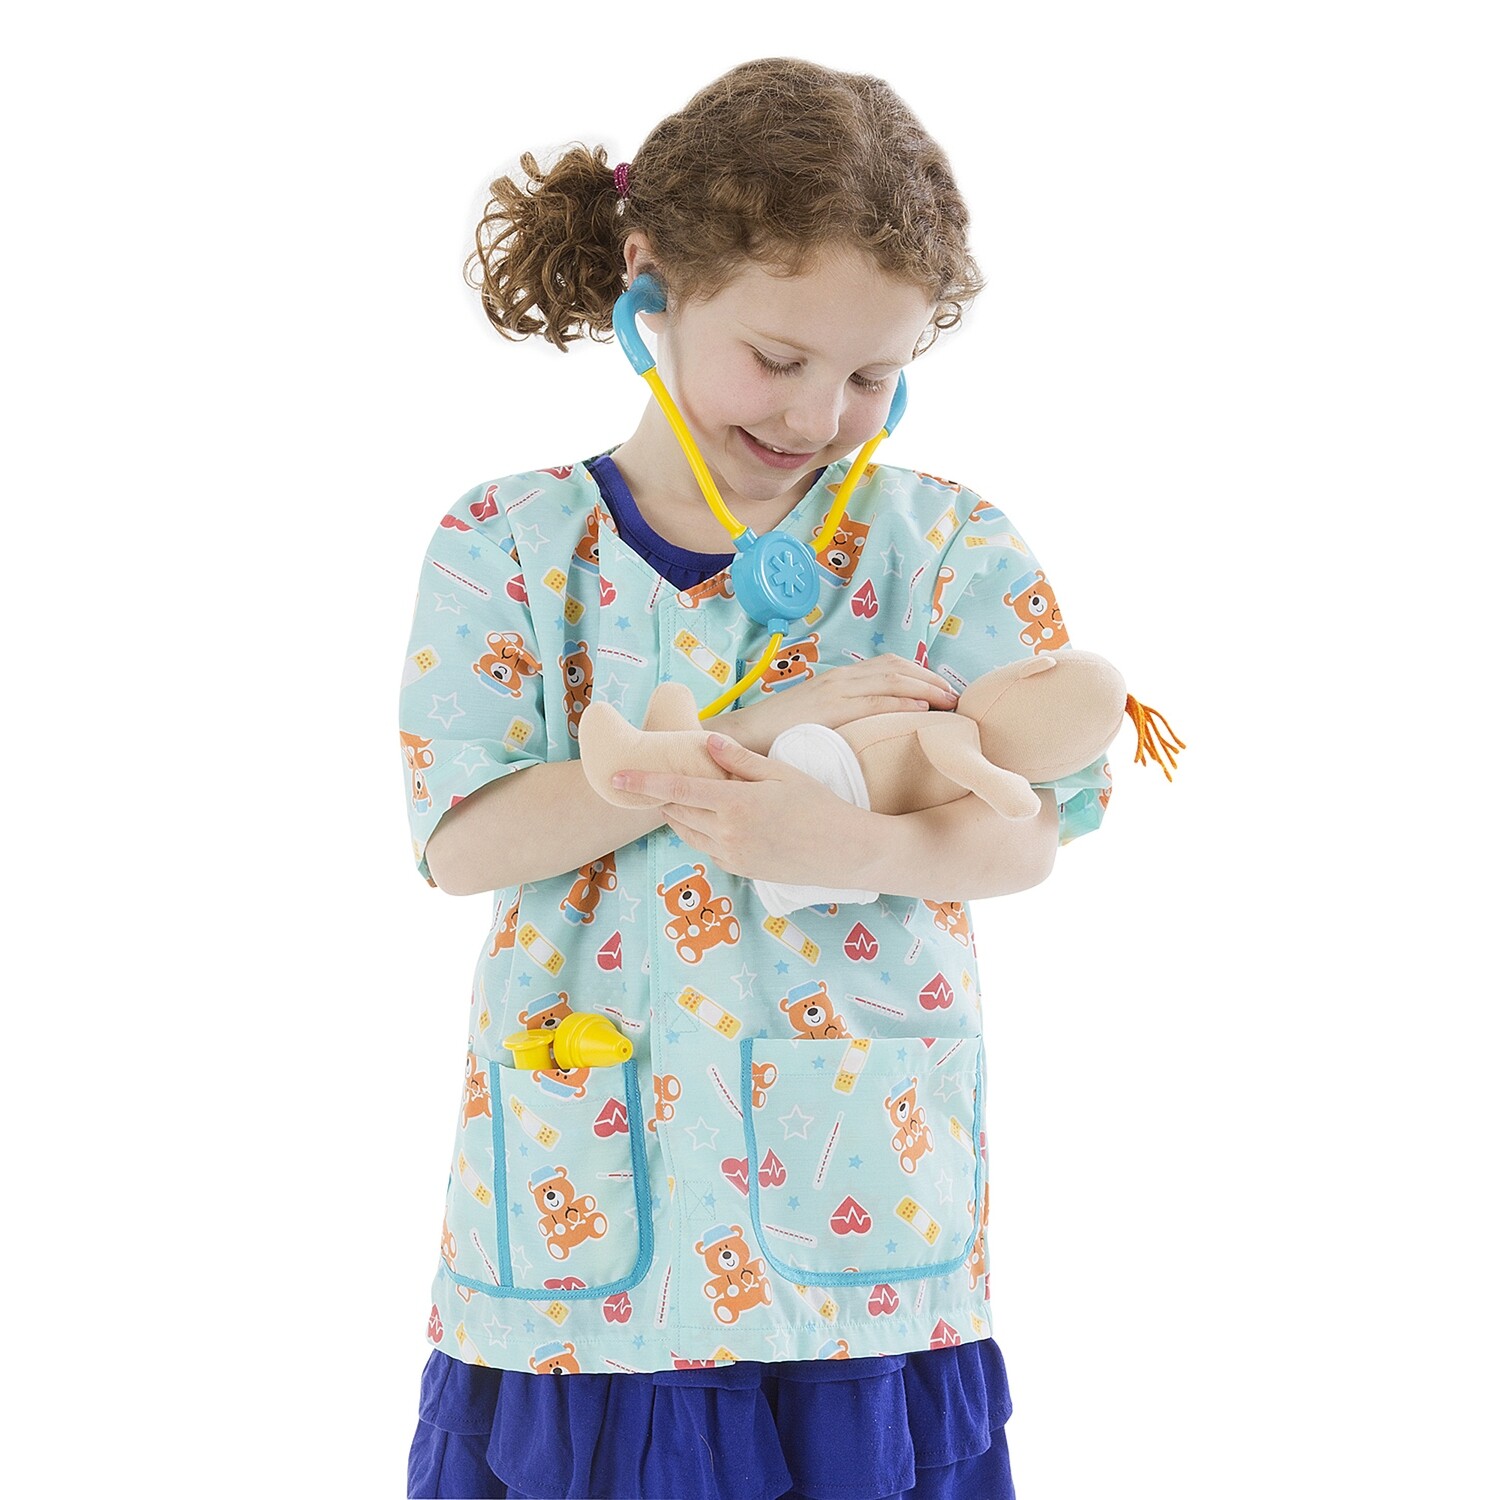 Pediatric Nurse Role Play Set